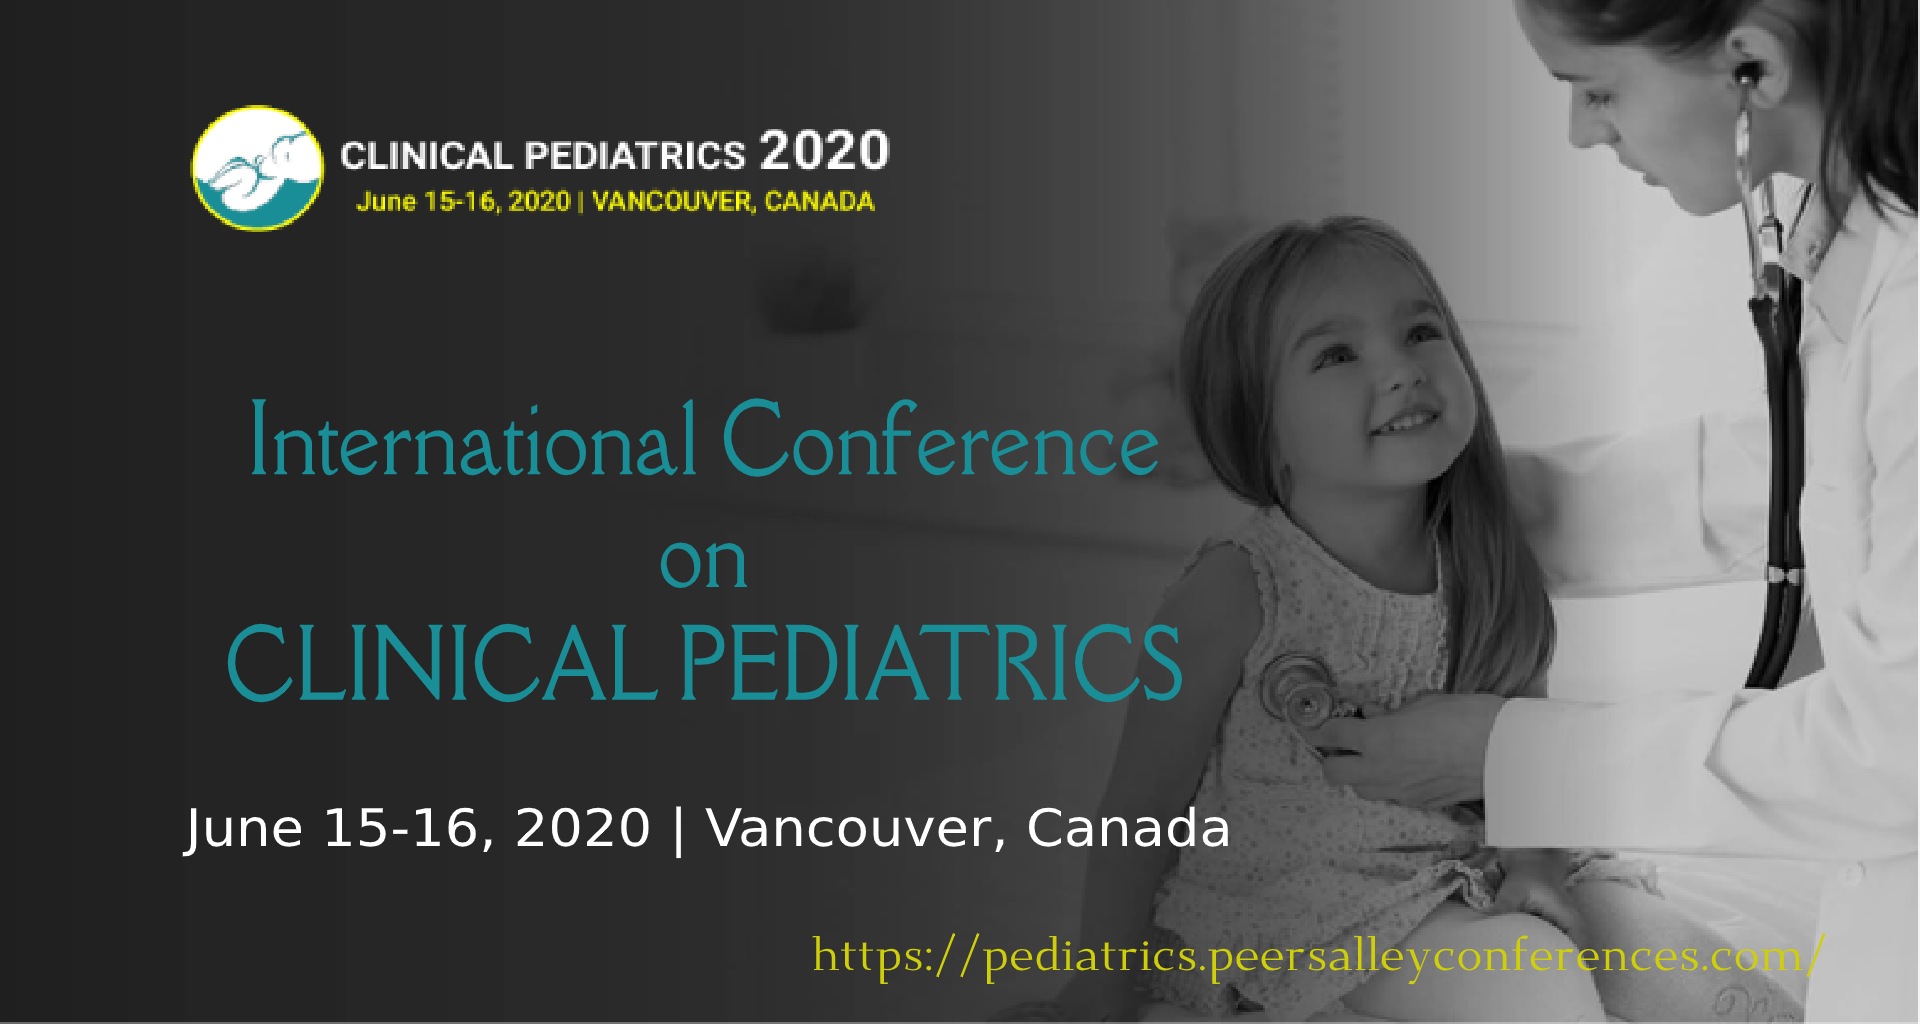 International PEDIATRICS Conference | Clinical Pediatrics 2020